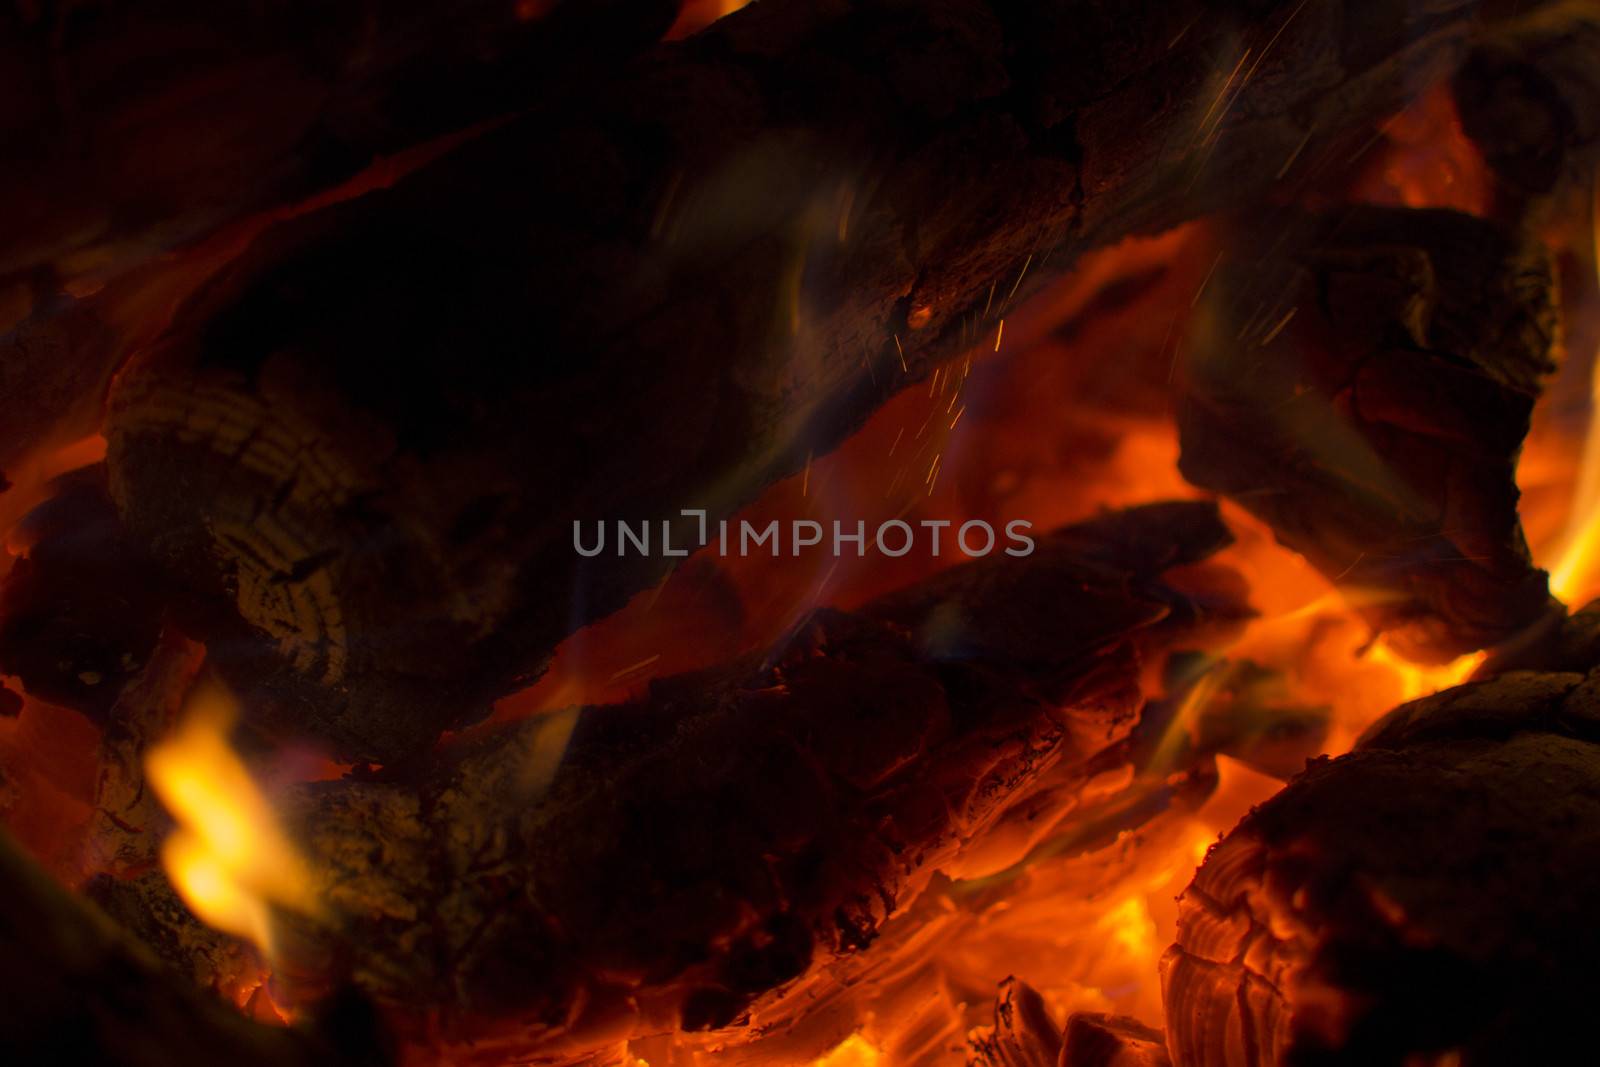 firewood burned in a bonfire closeup